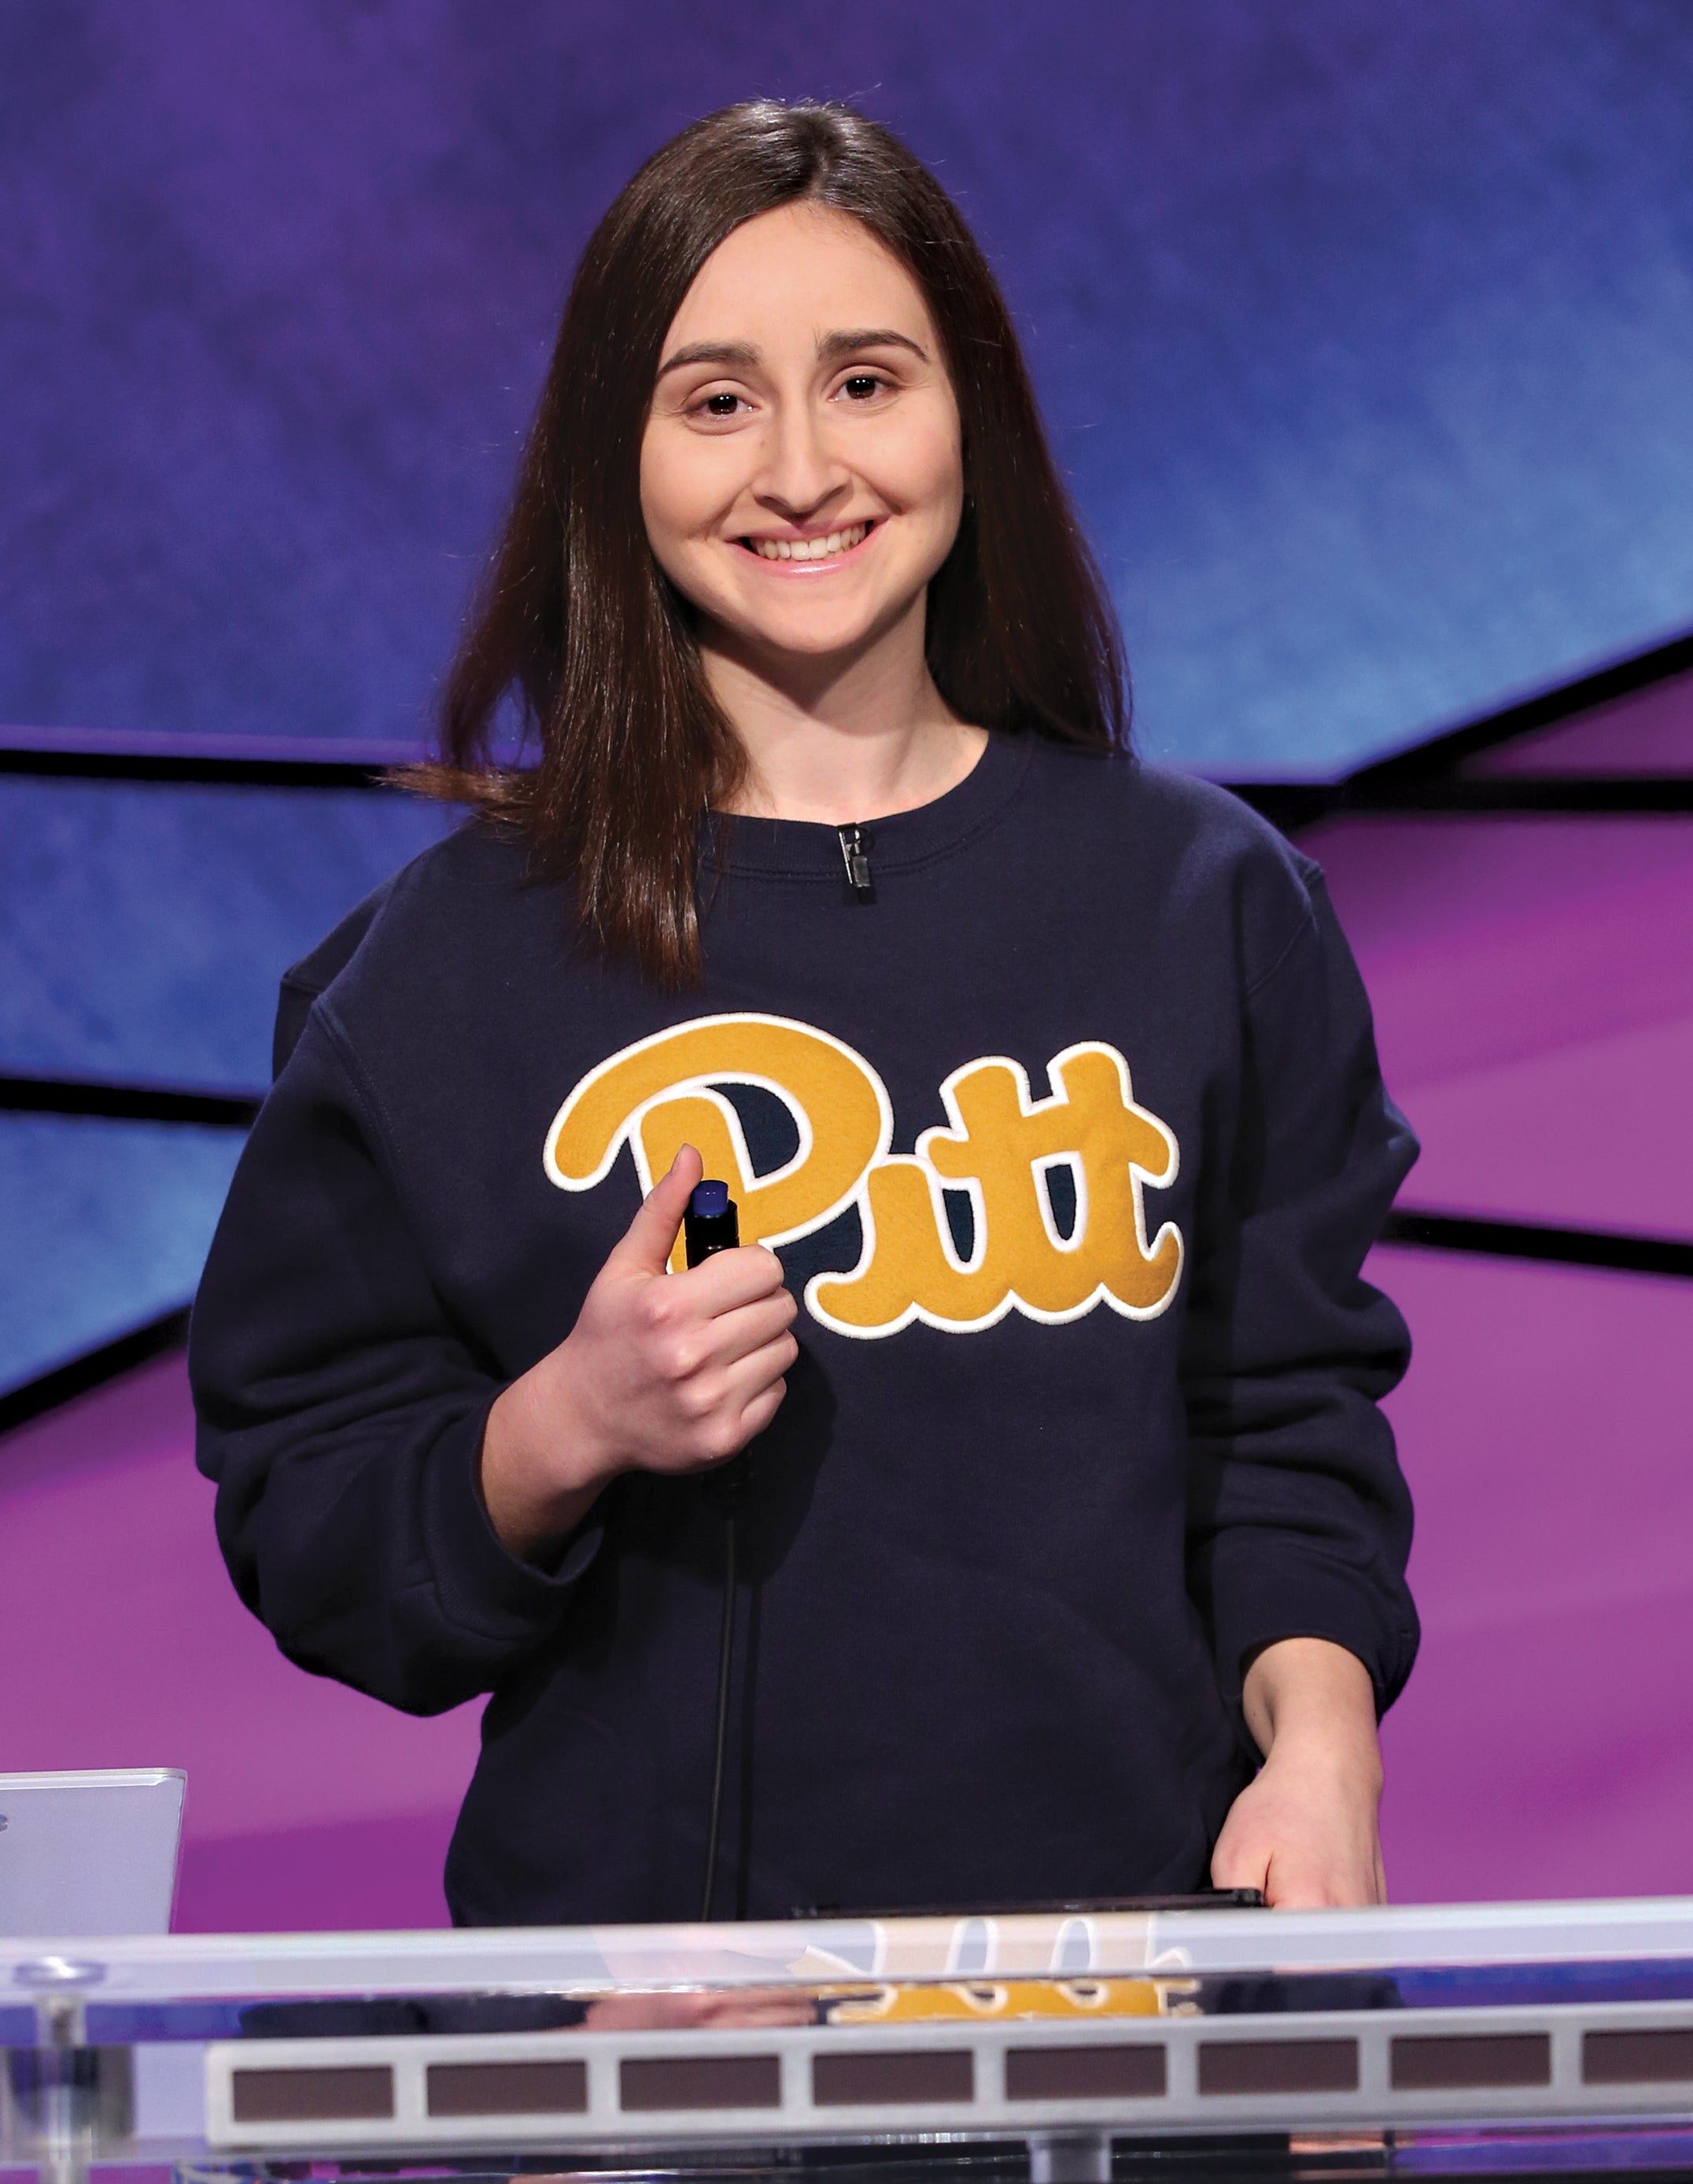 Sarah Dubnik in a Pitt script sweatshirt on the set of Jeopardy!